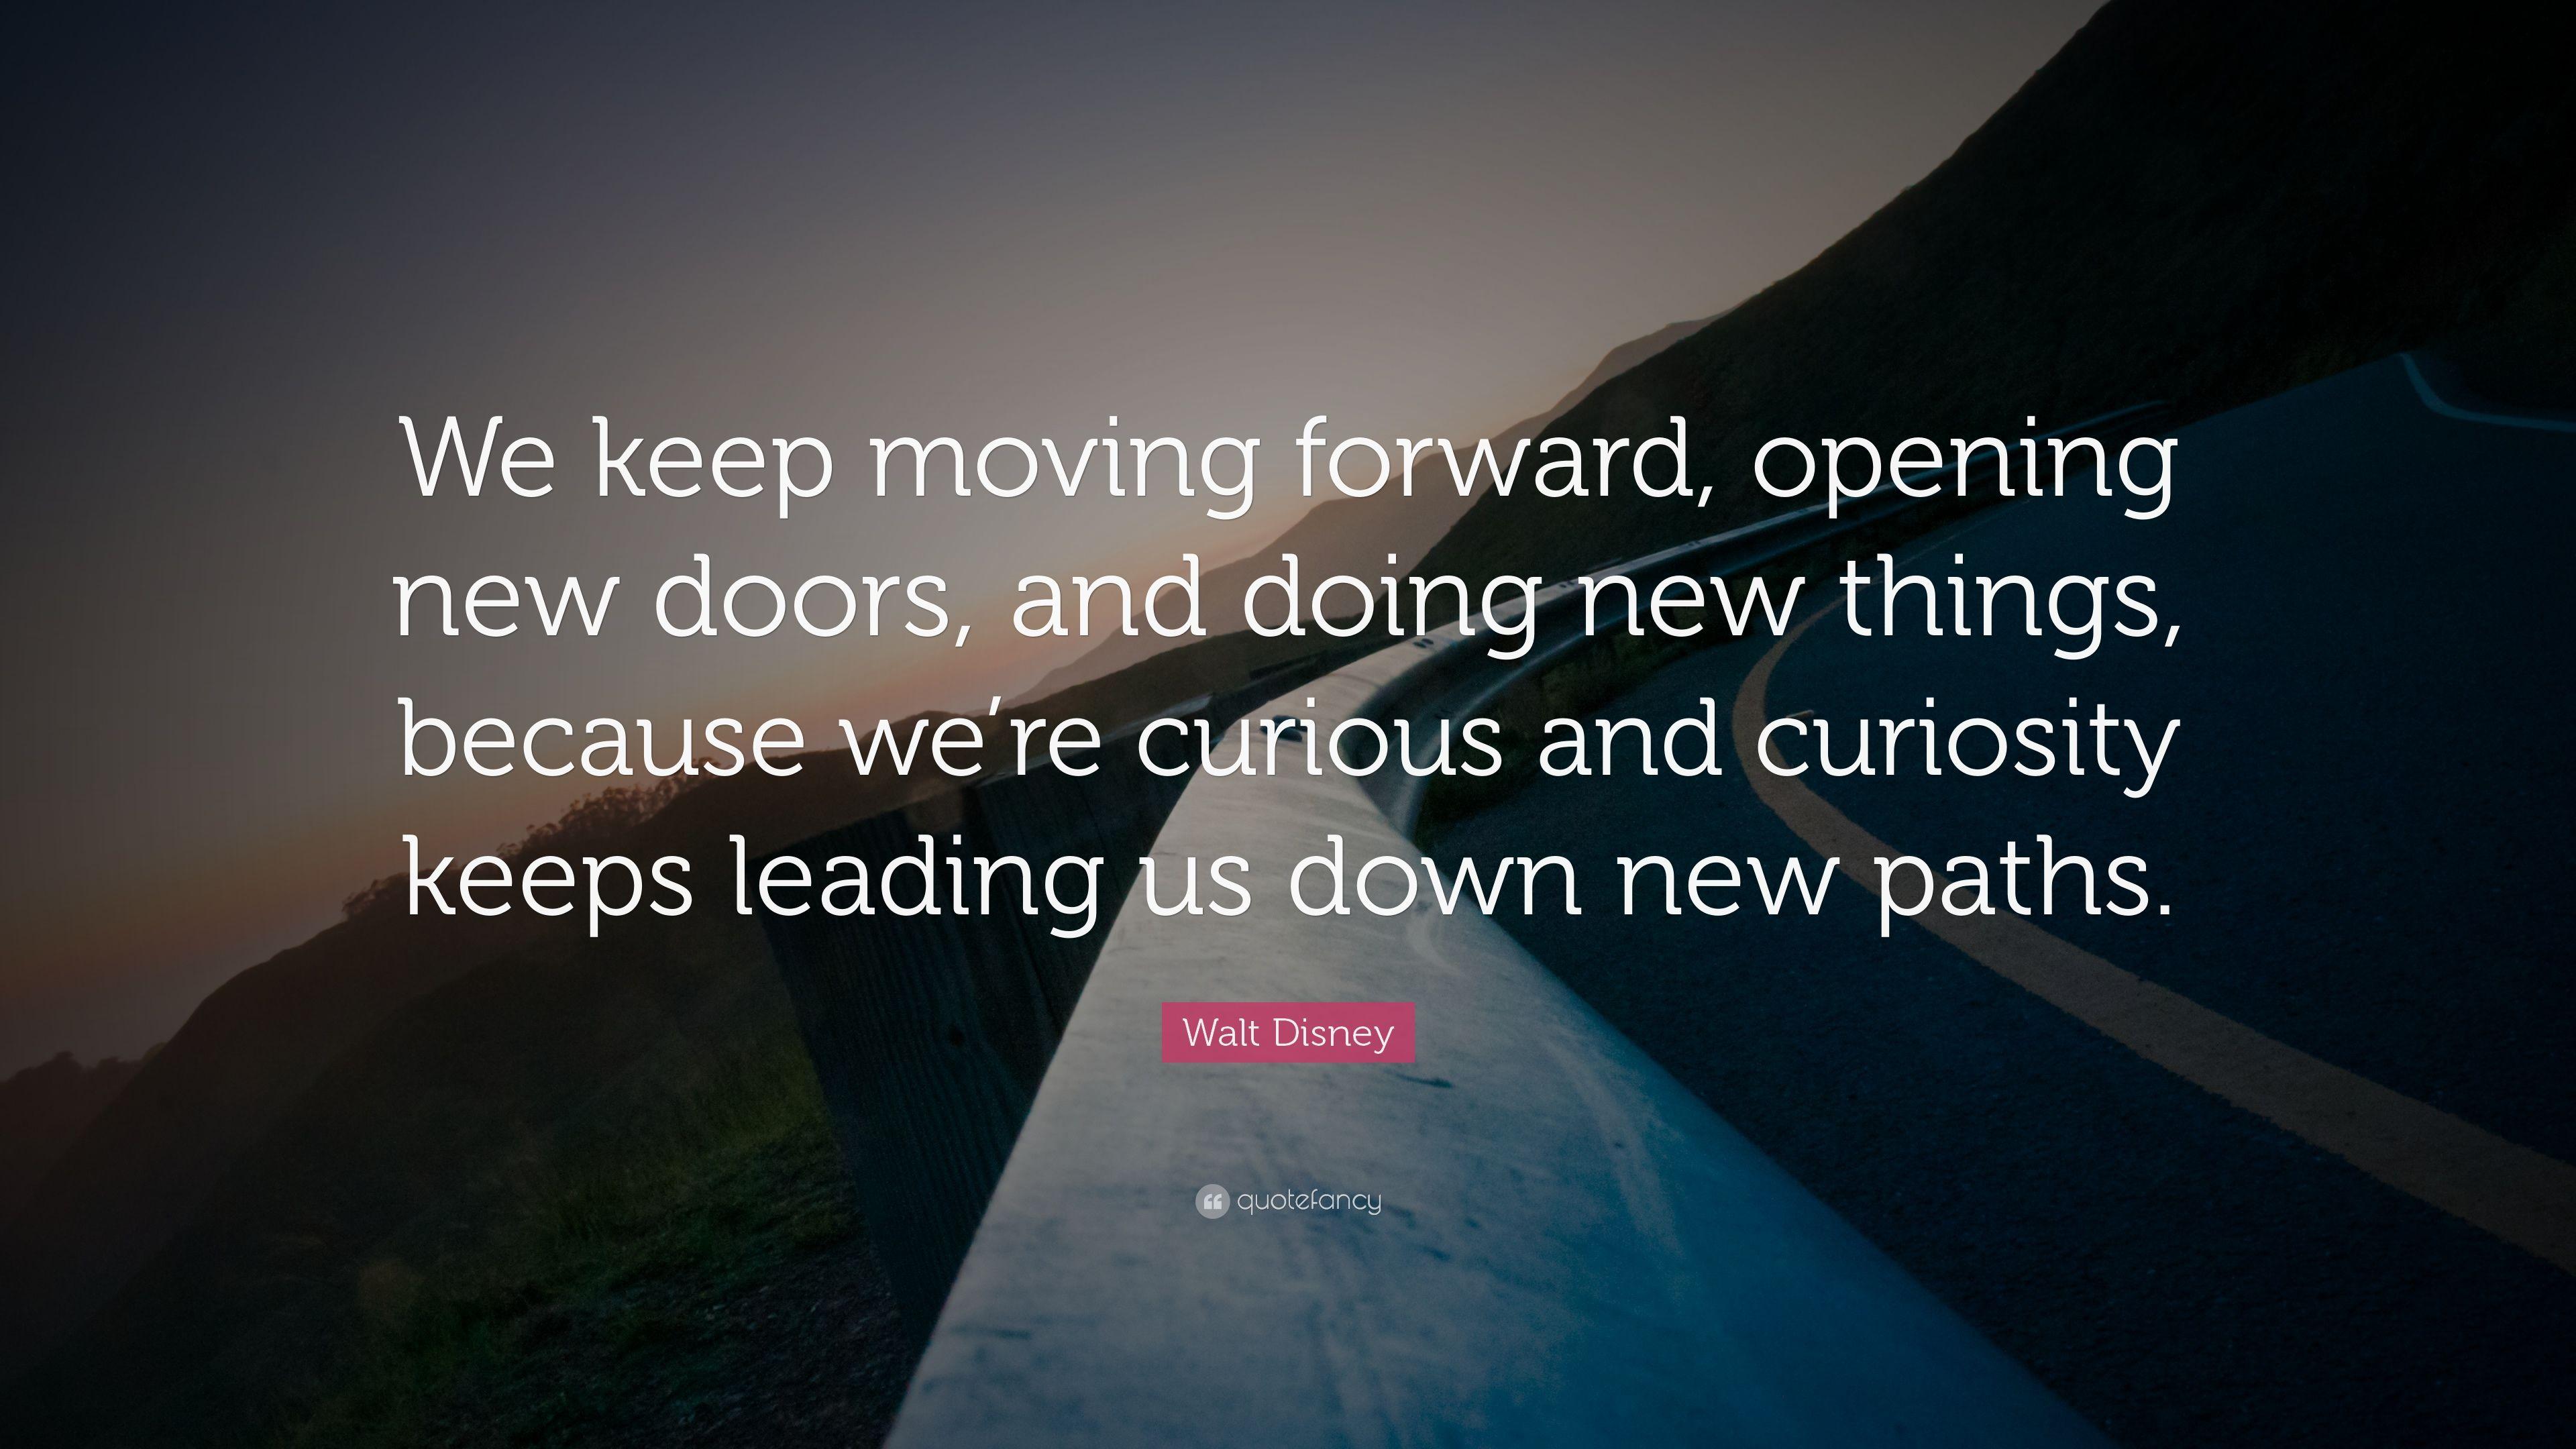 Walt Disney Quote: “We keep moving forward, opening new doors